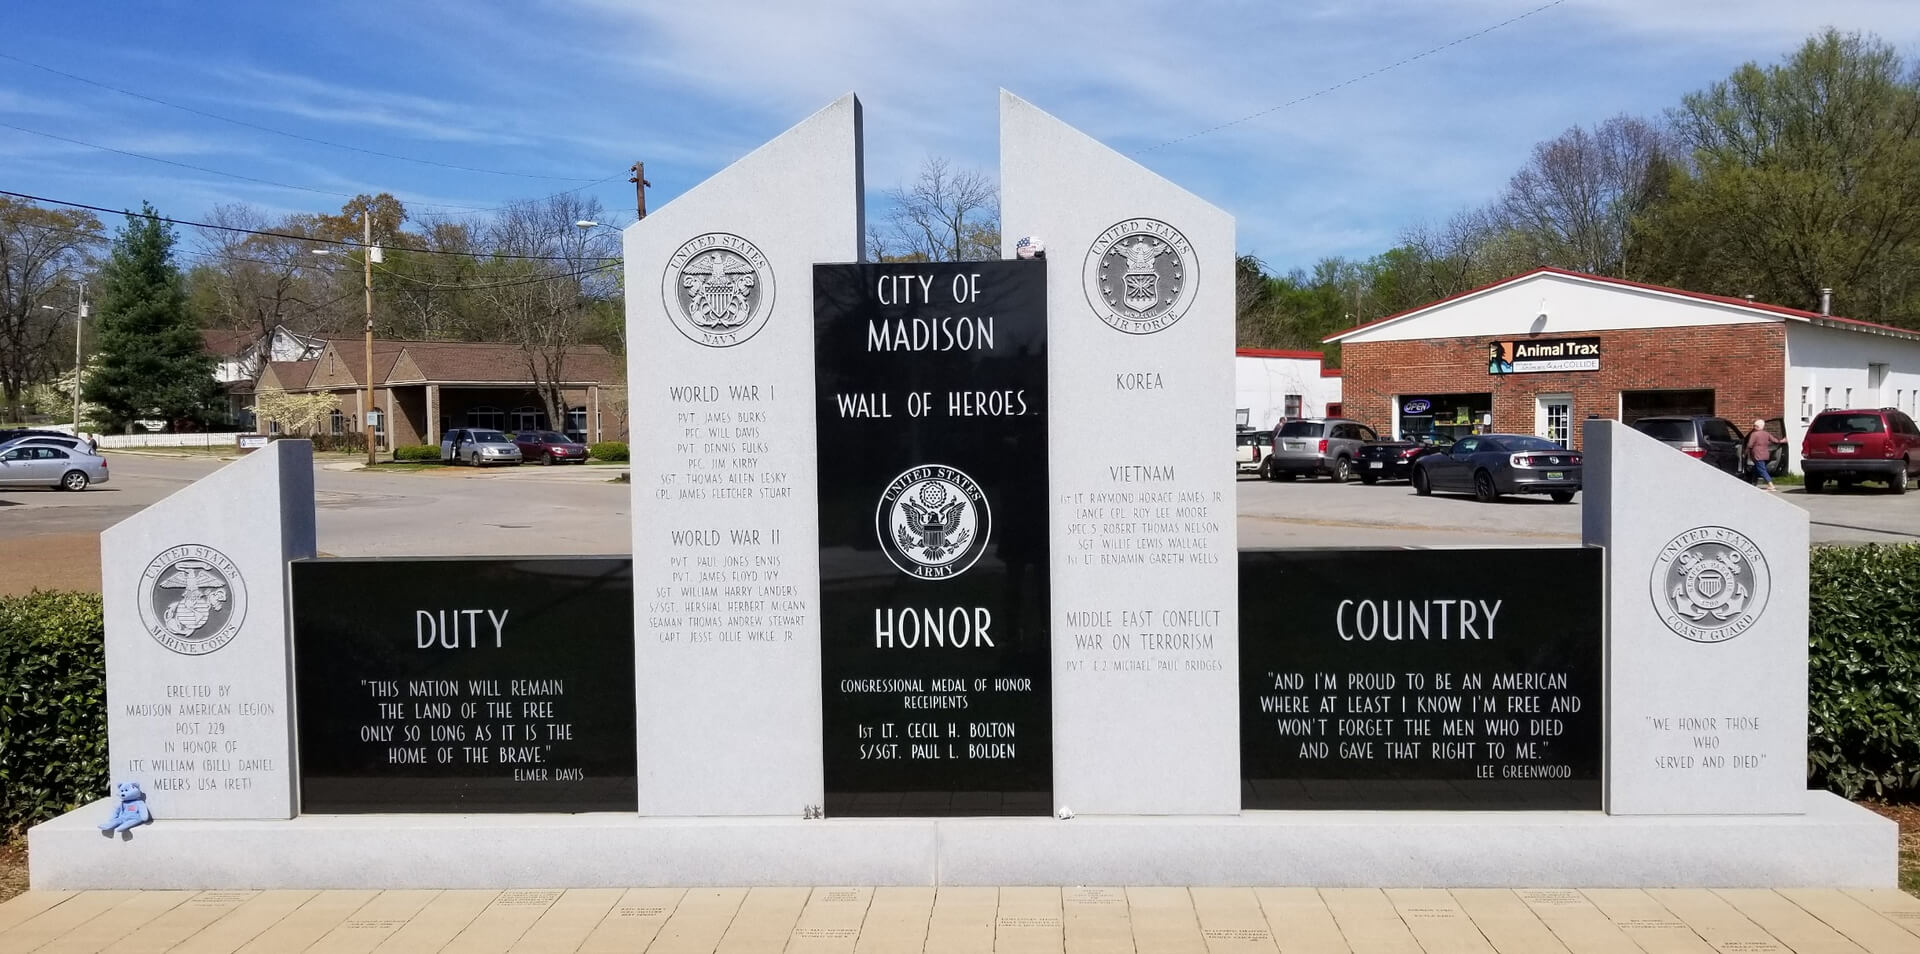 A memorial wall of heroes at the graveyard